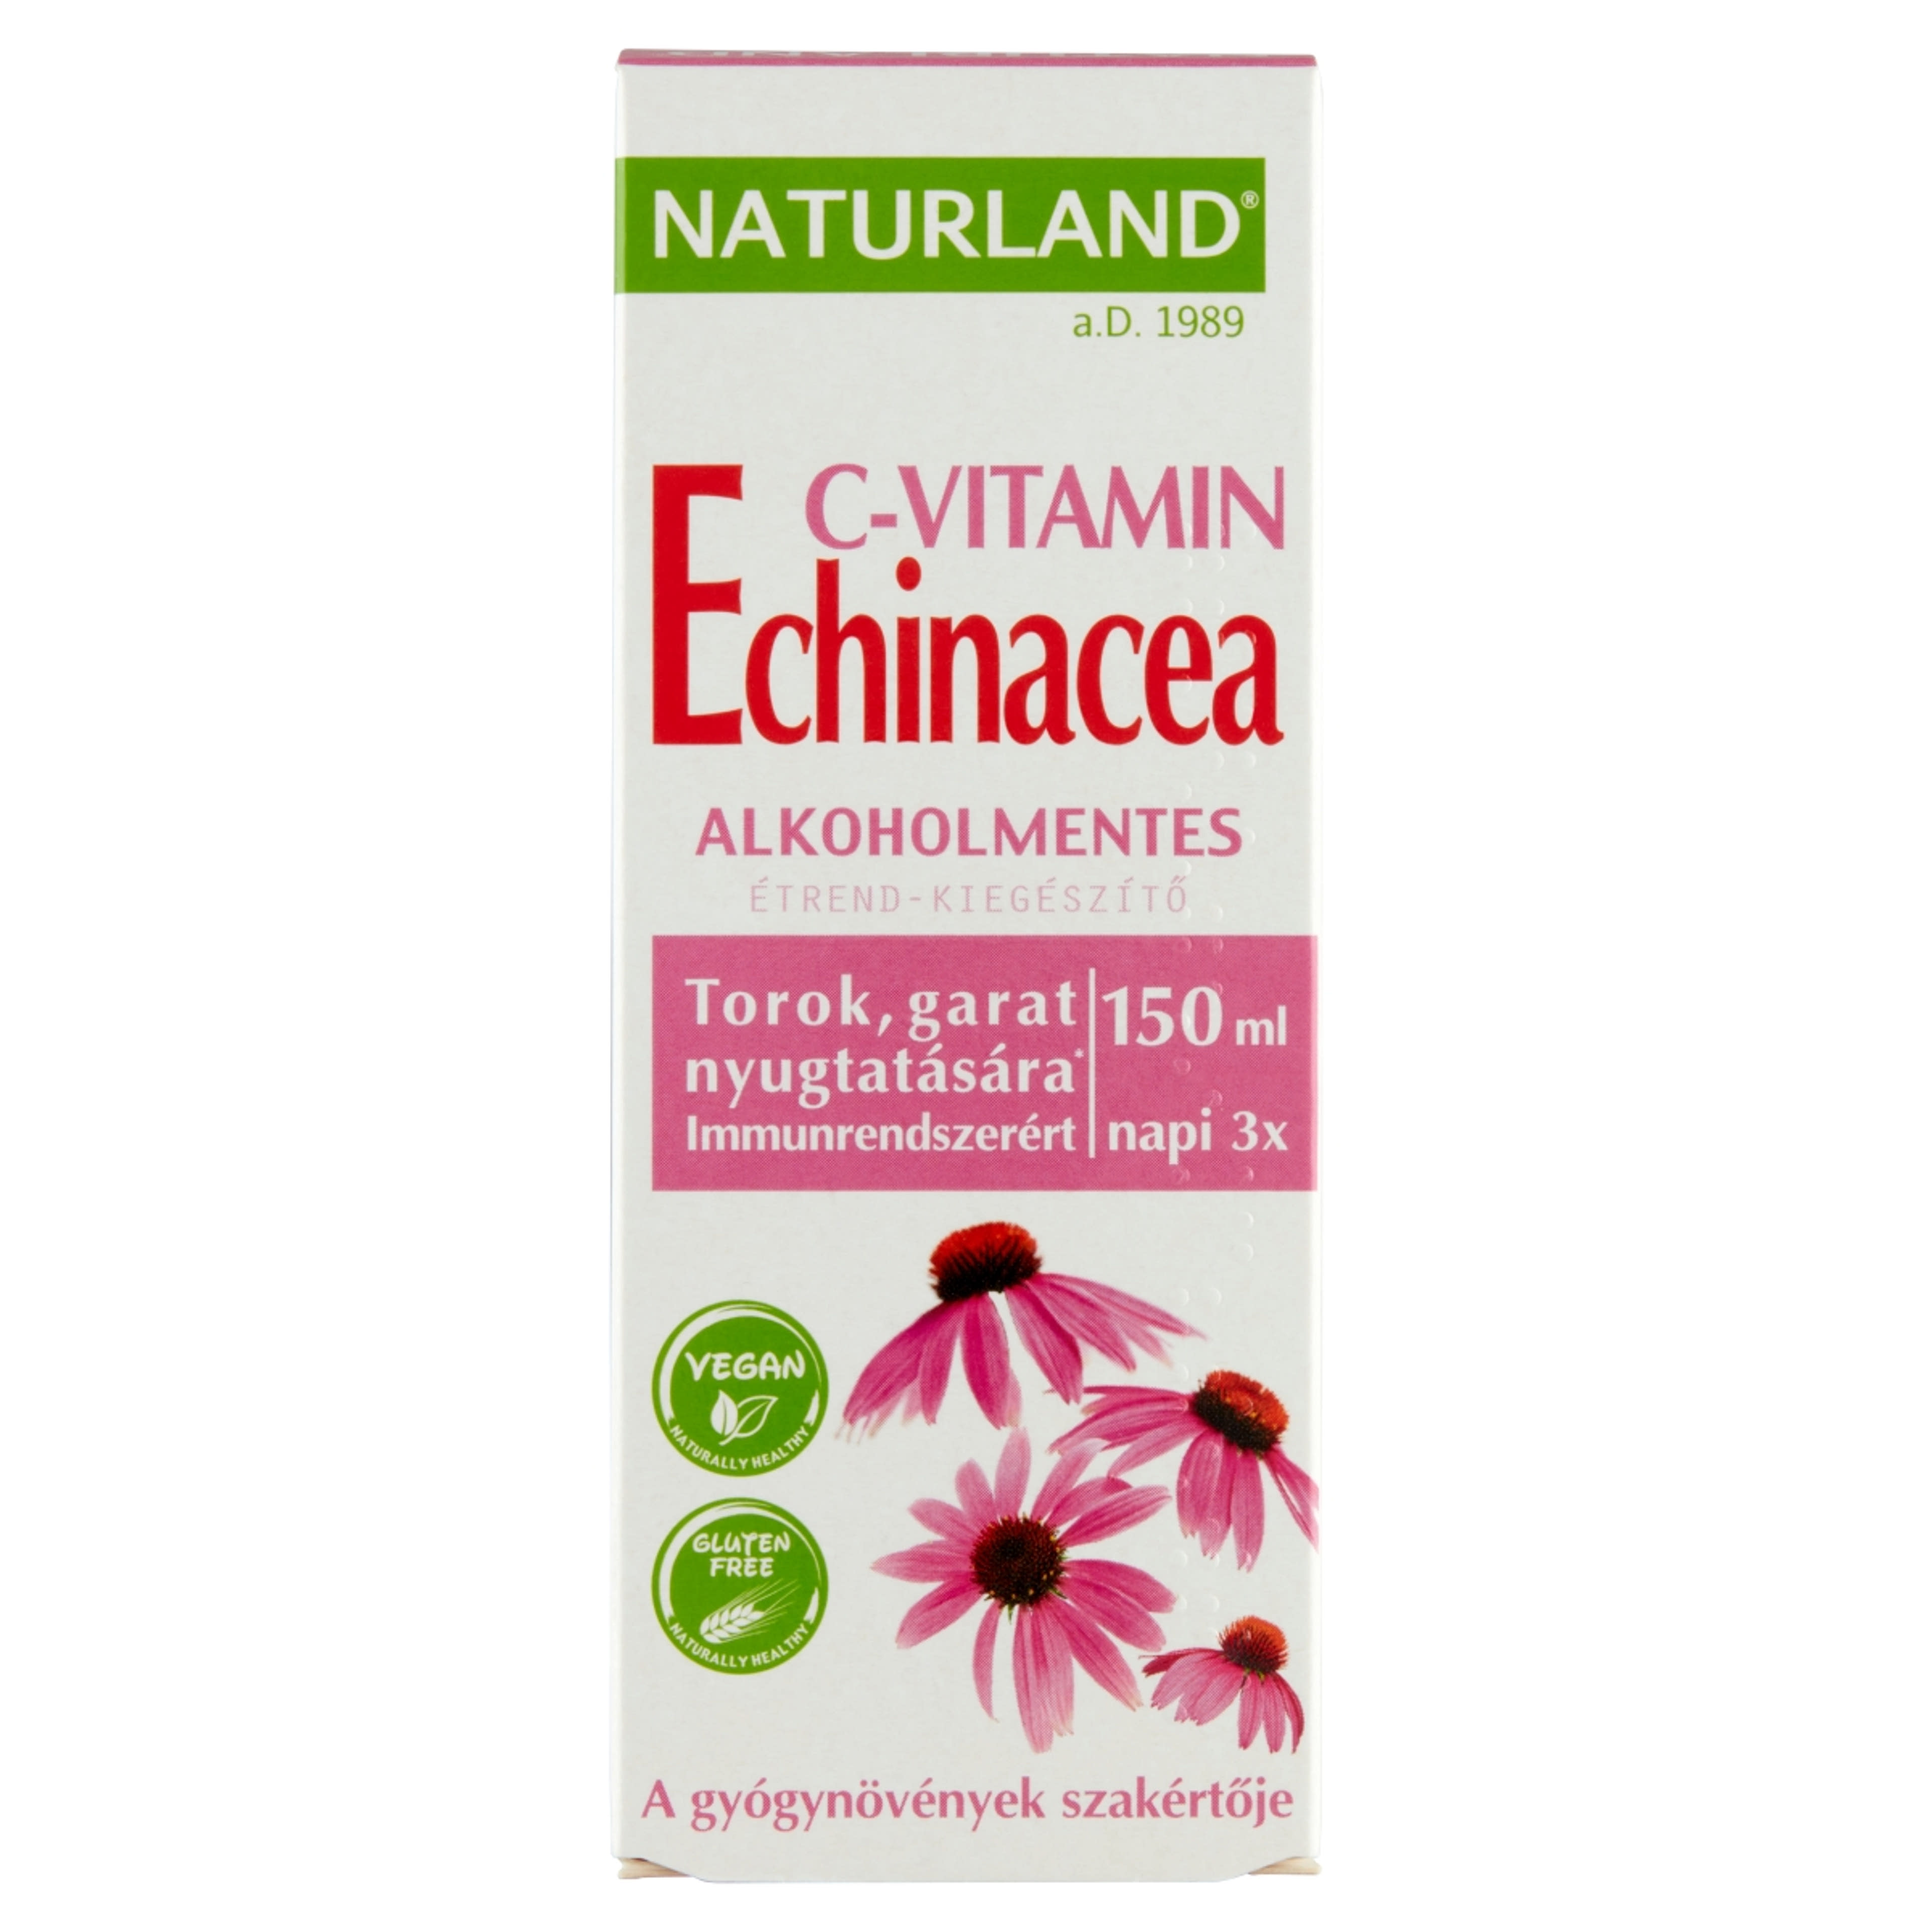 Naturland NL Echinacea +C-Vitamin - 150 ml-1